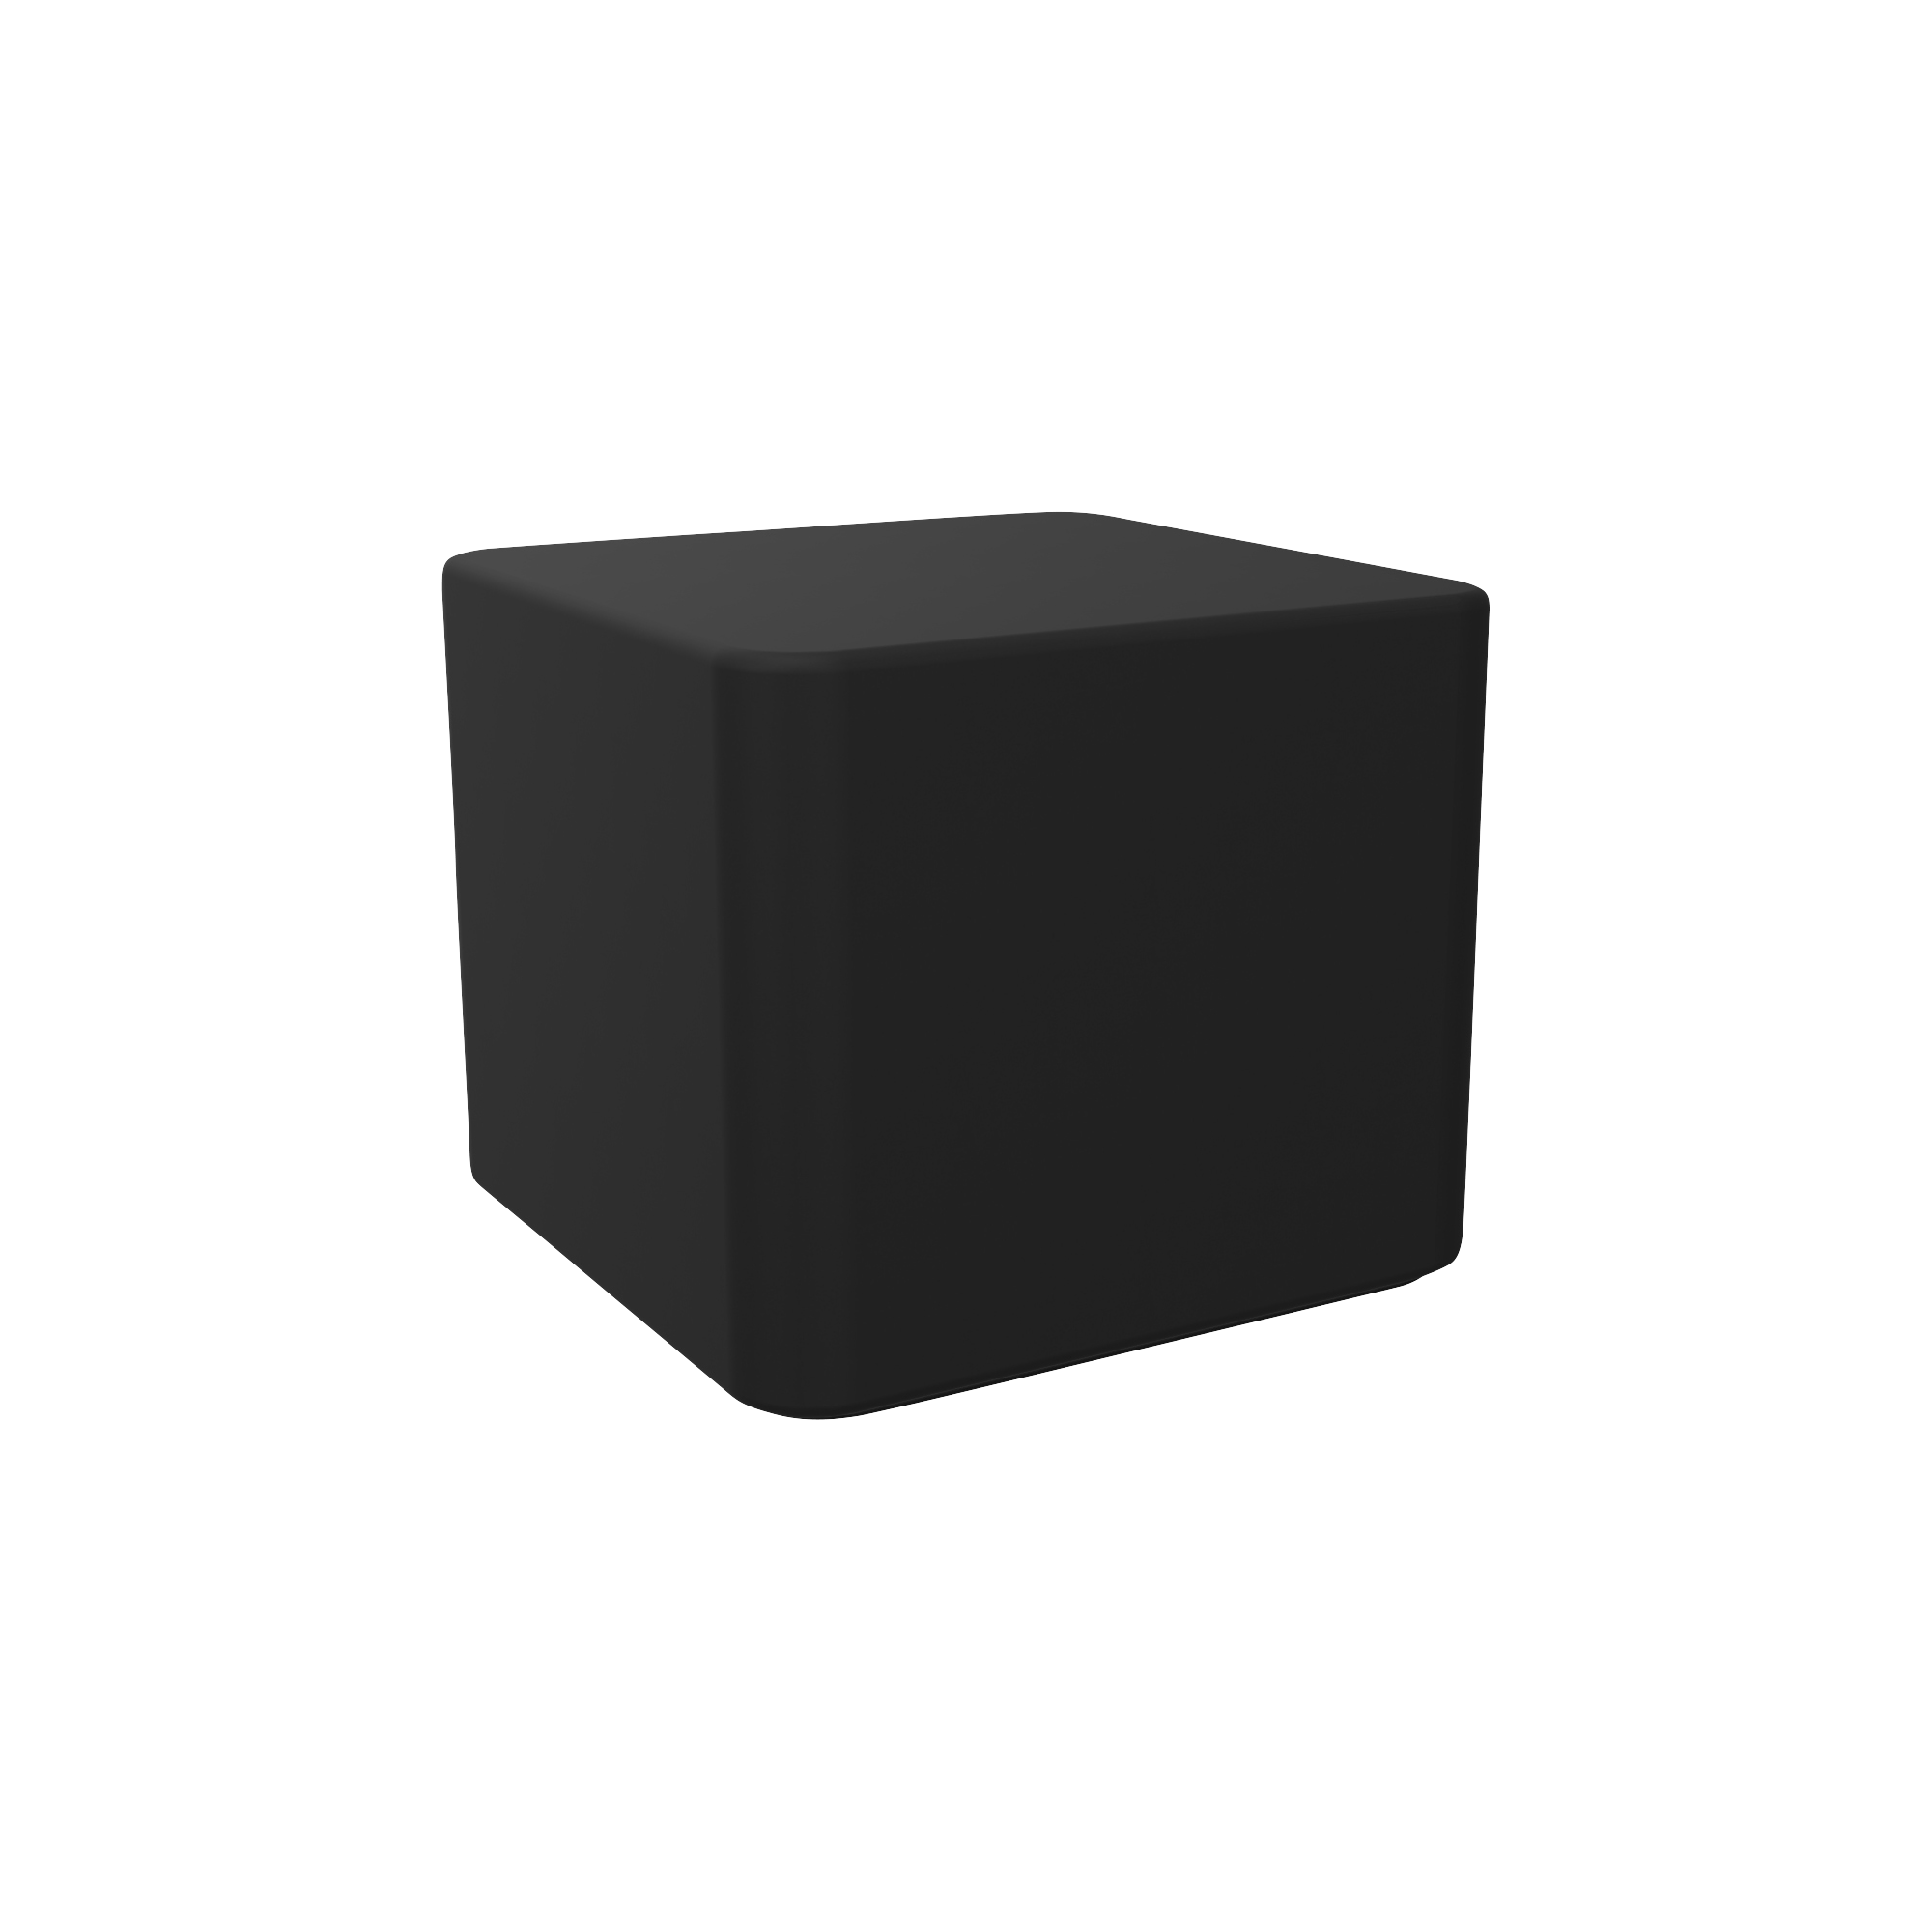 A black cube shaped ottomon